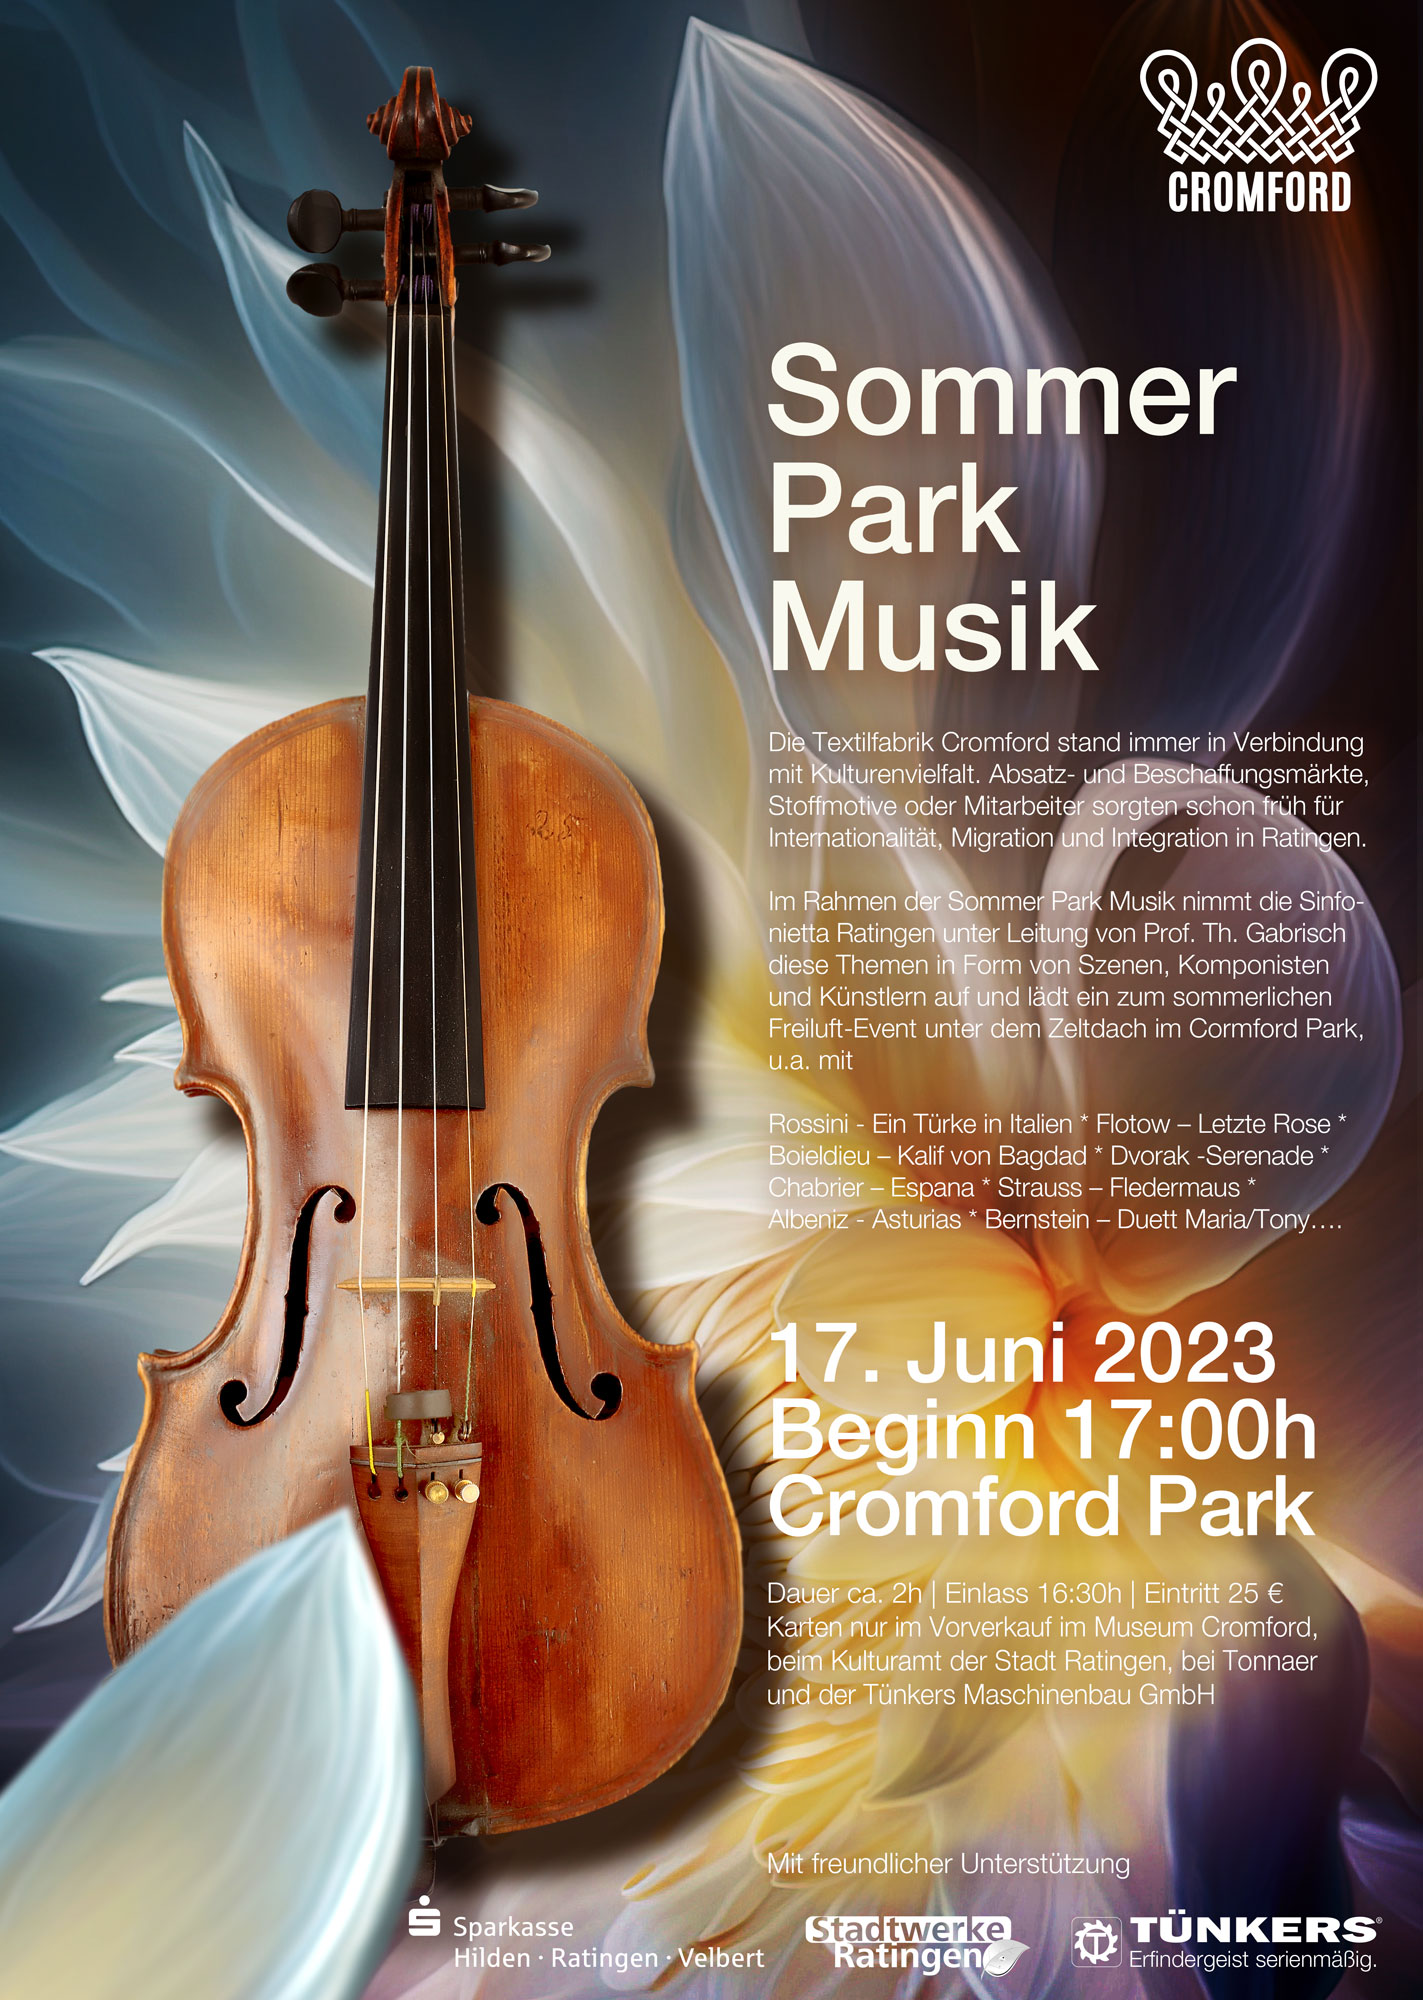 plakat des Parkfestes Sommer Park Musik